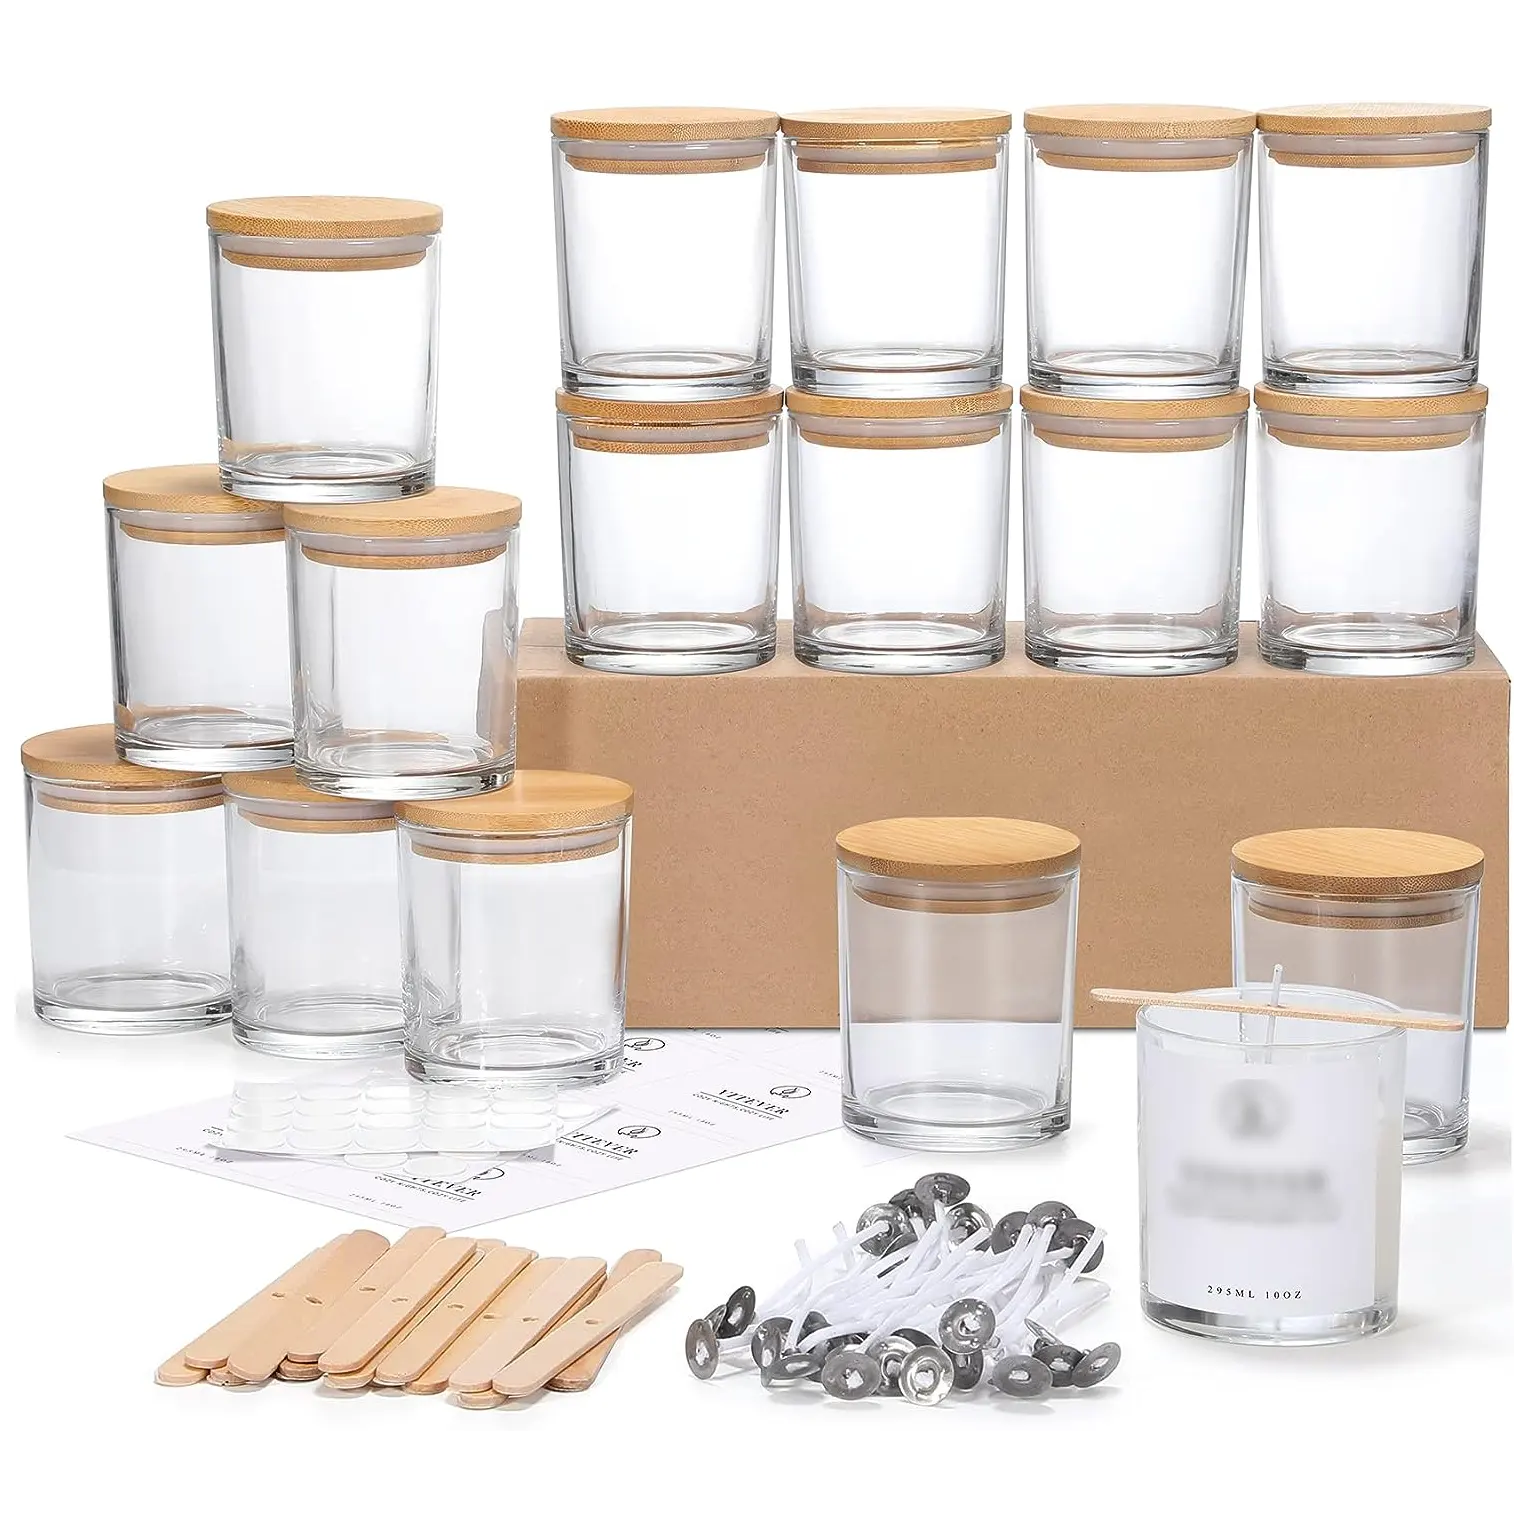 Kit per la produzione di candele per aromaterapia forniture kit per la produzione di candele di soia kit per la produzione di candele fai da te